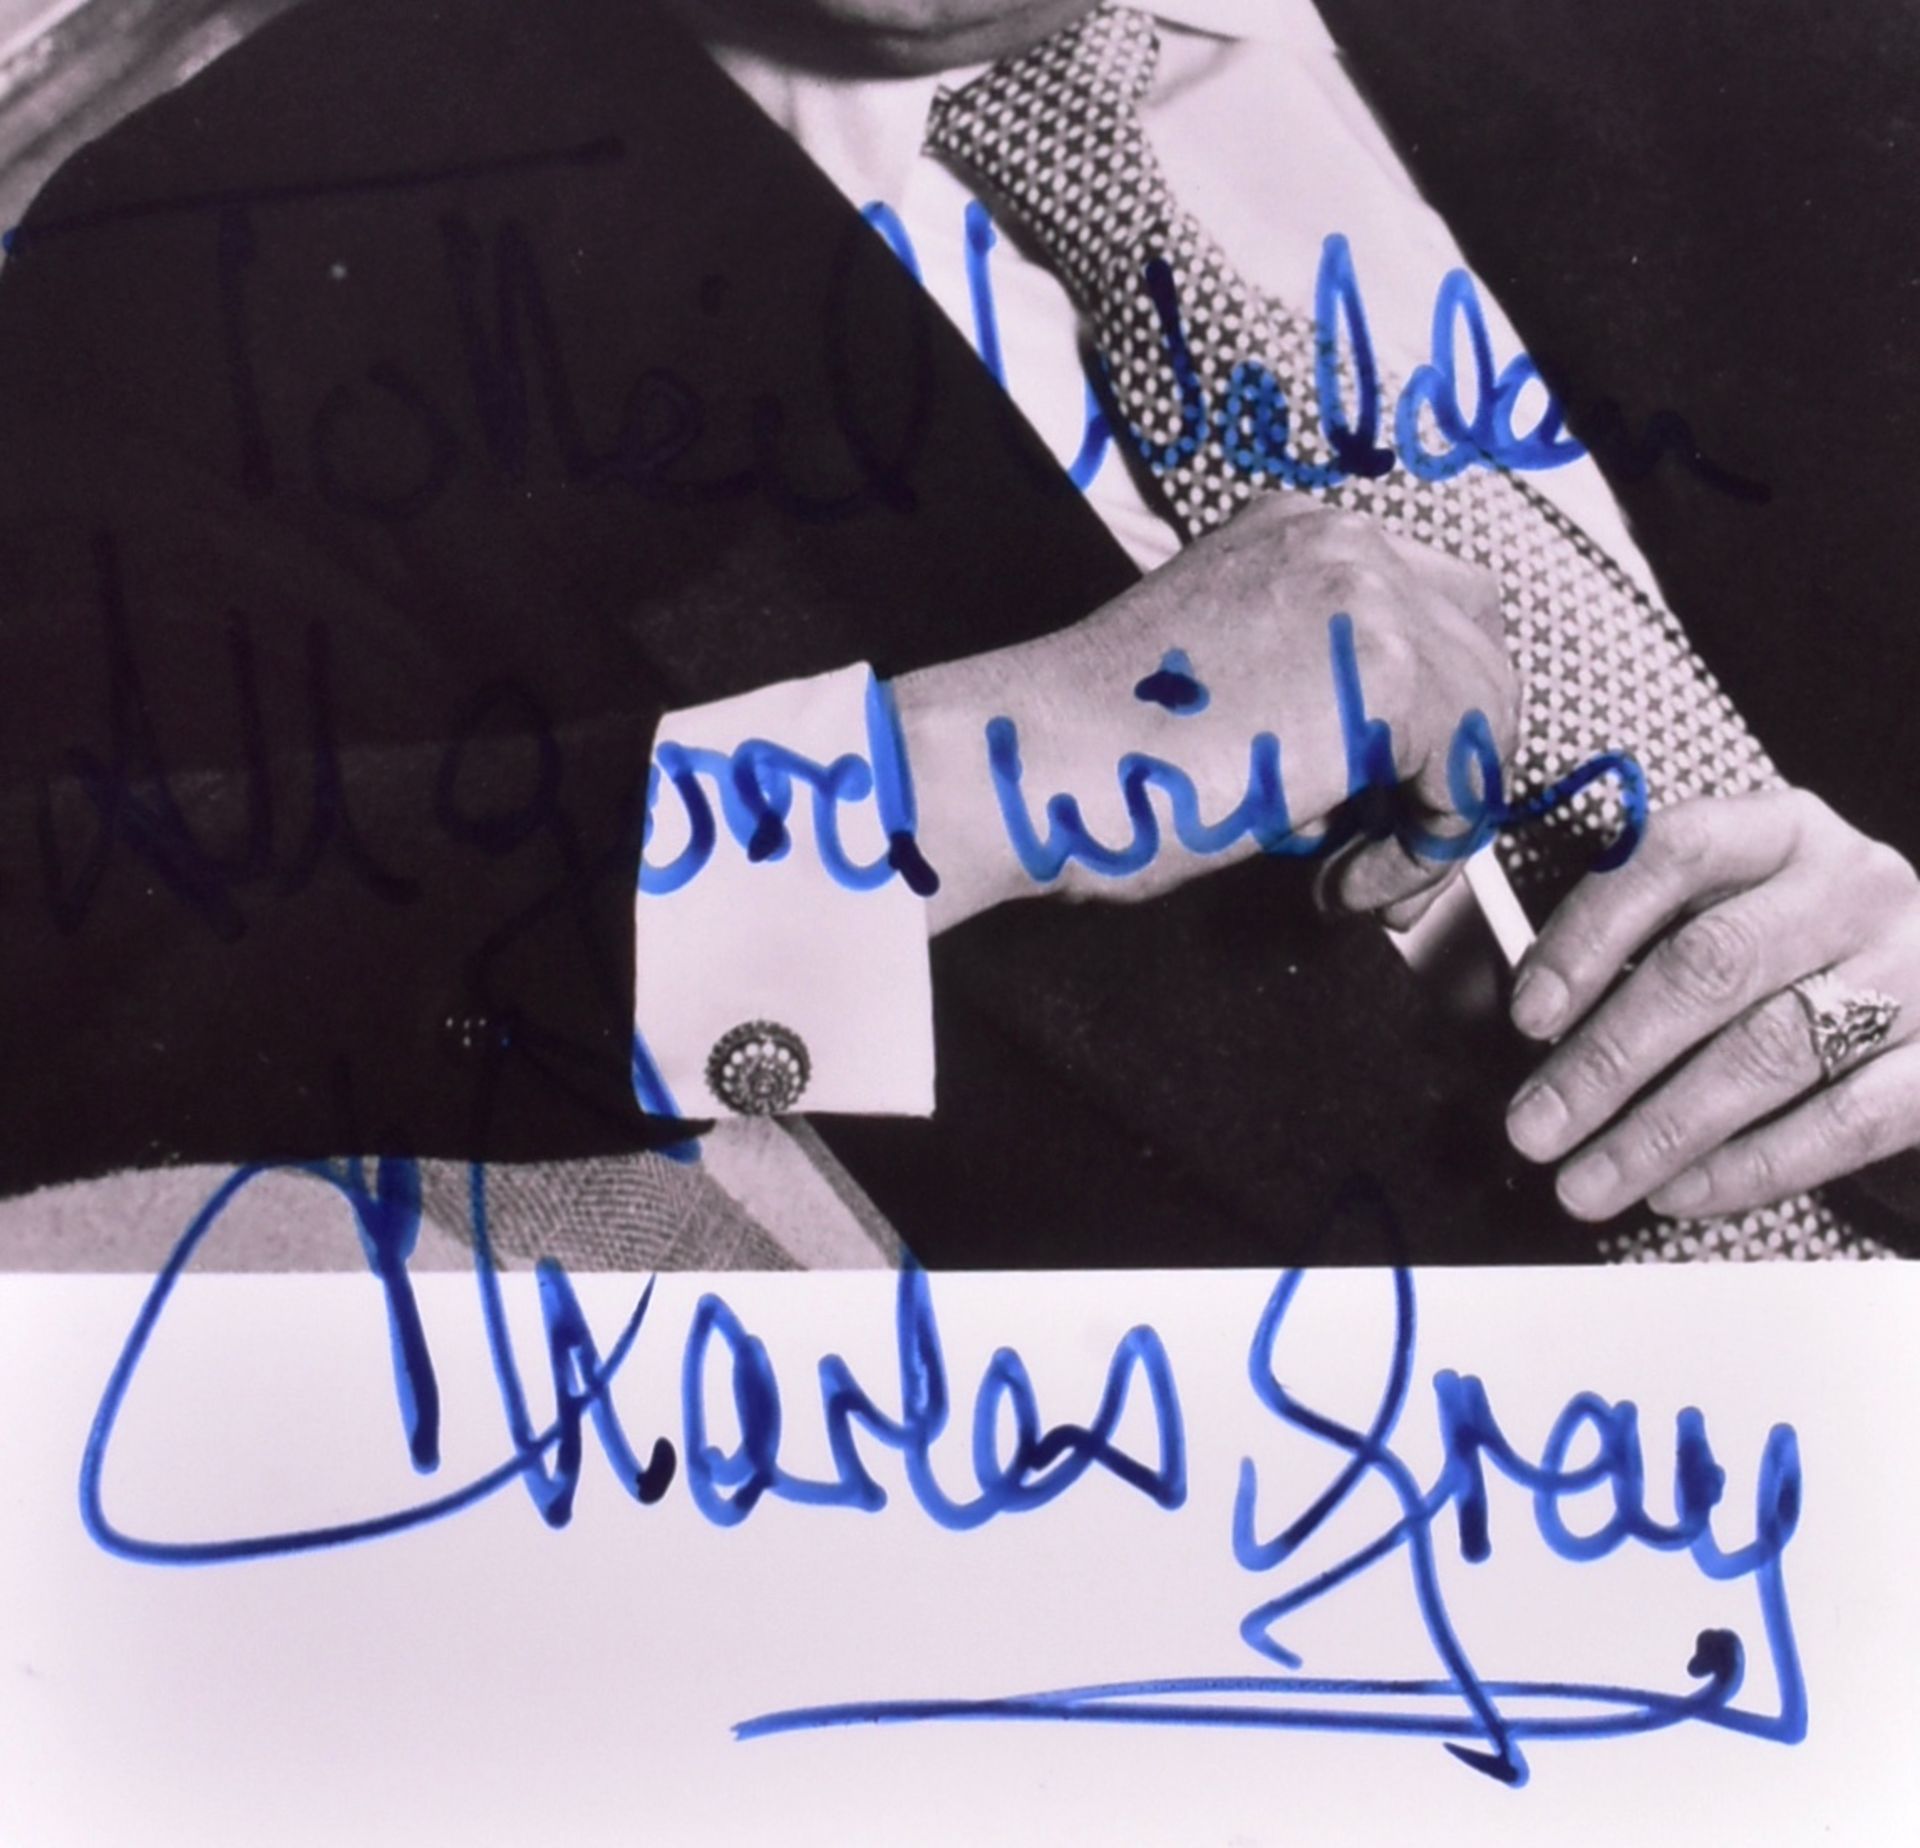 CHARLES GRAY (1928-2000) - JAMES BOND 007 - AUTOGRAPH - Image 2 of 2